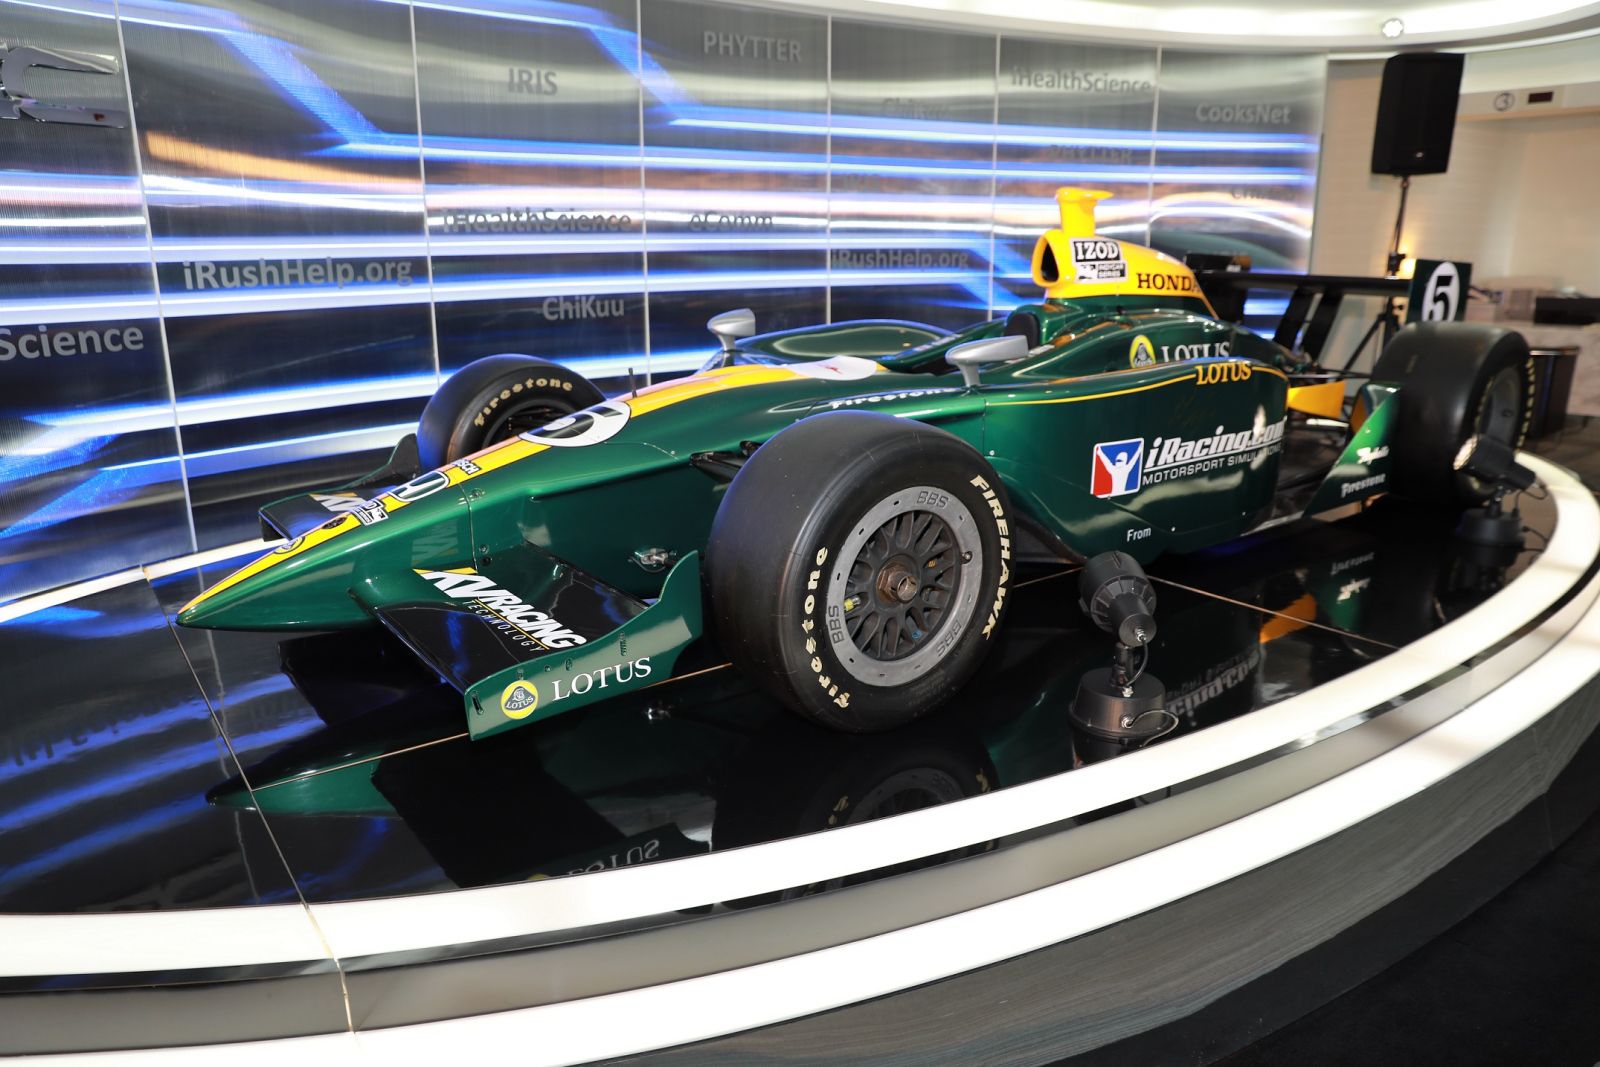 Lotus車隊IndyCar 5號車款，亞洲車神佐藤琢磨（Takuma Sato）在2010年Indianapolis比賽中所駕駛的賽車(無引擎)。